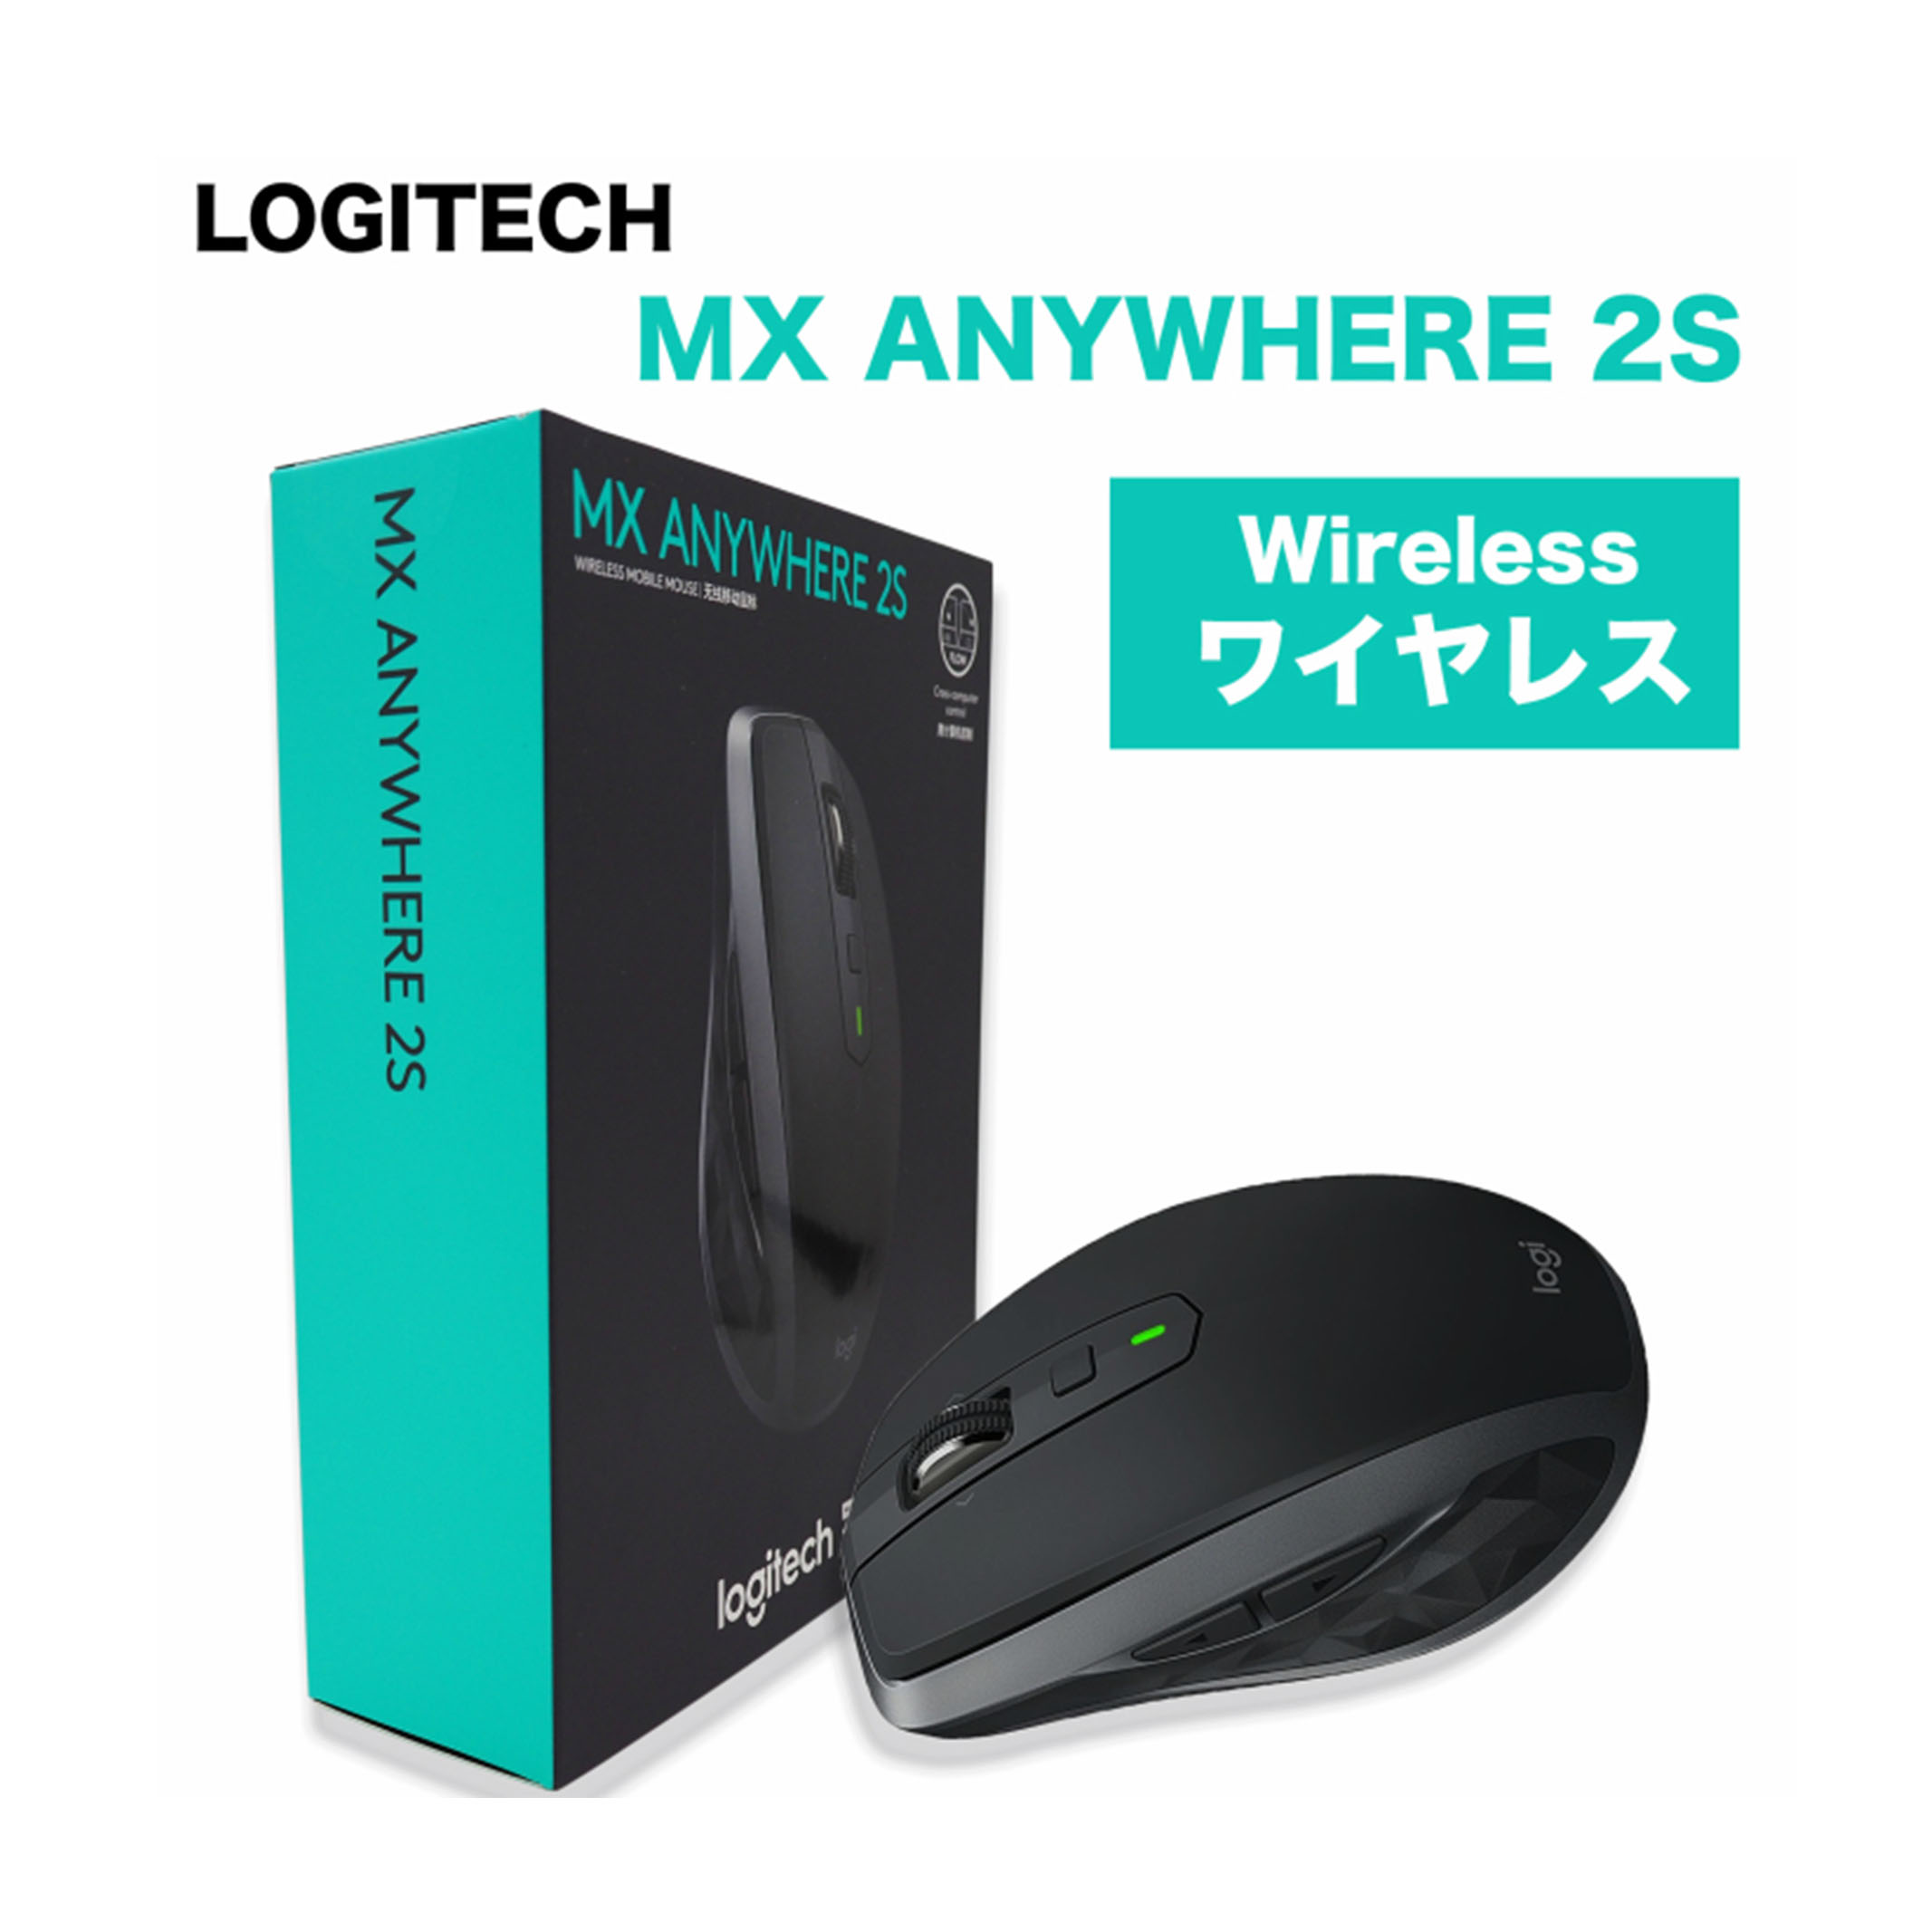 Logitech MX Anywhere 2S ワイヤレスマウス 910-005132 (Graphite) [並行輸入品]